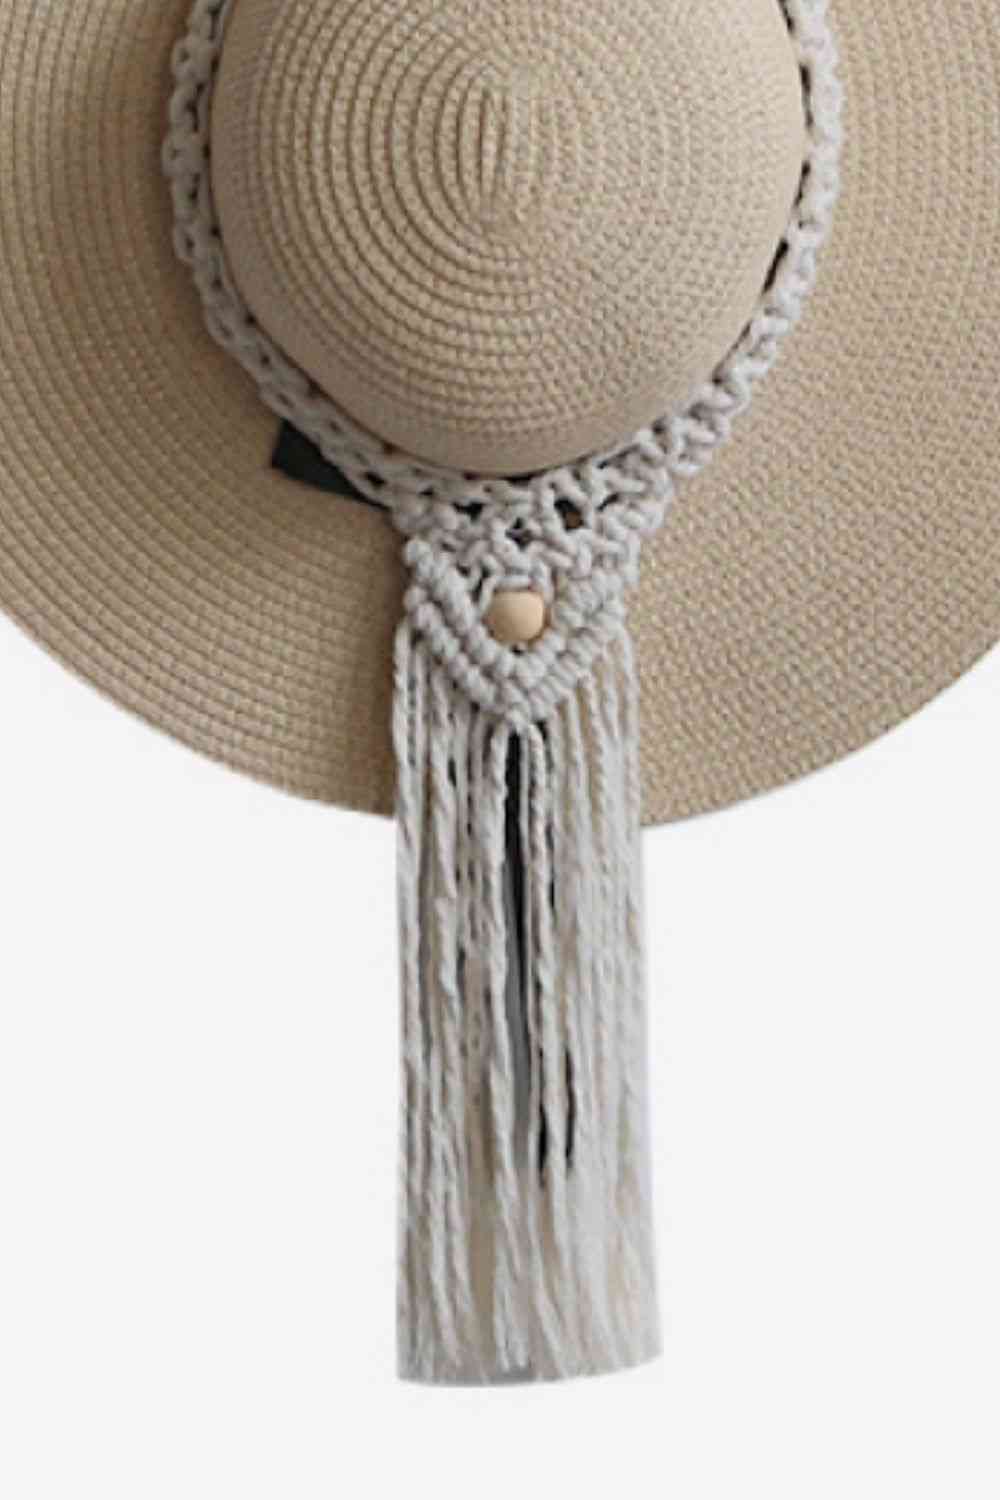 TEEK - Beige Macrame Single Hat Hanger HOME DECOR TEEK Trend   